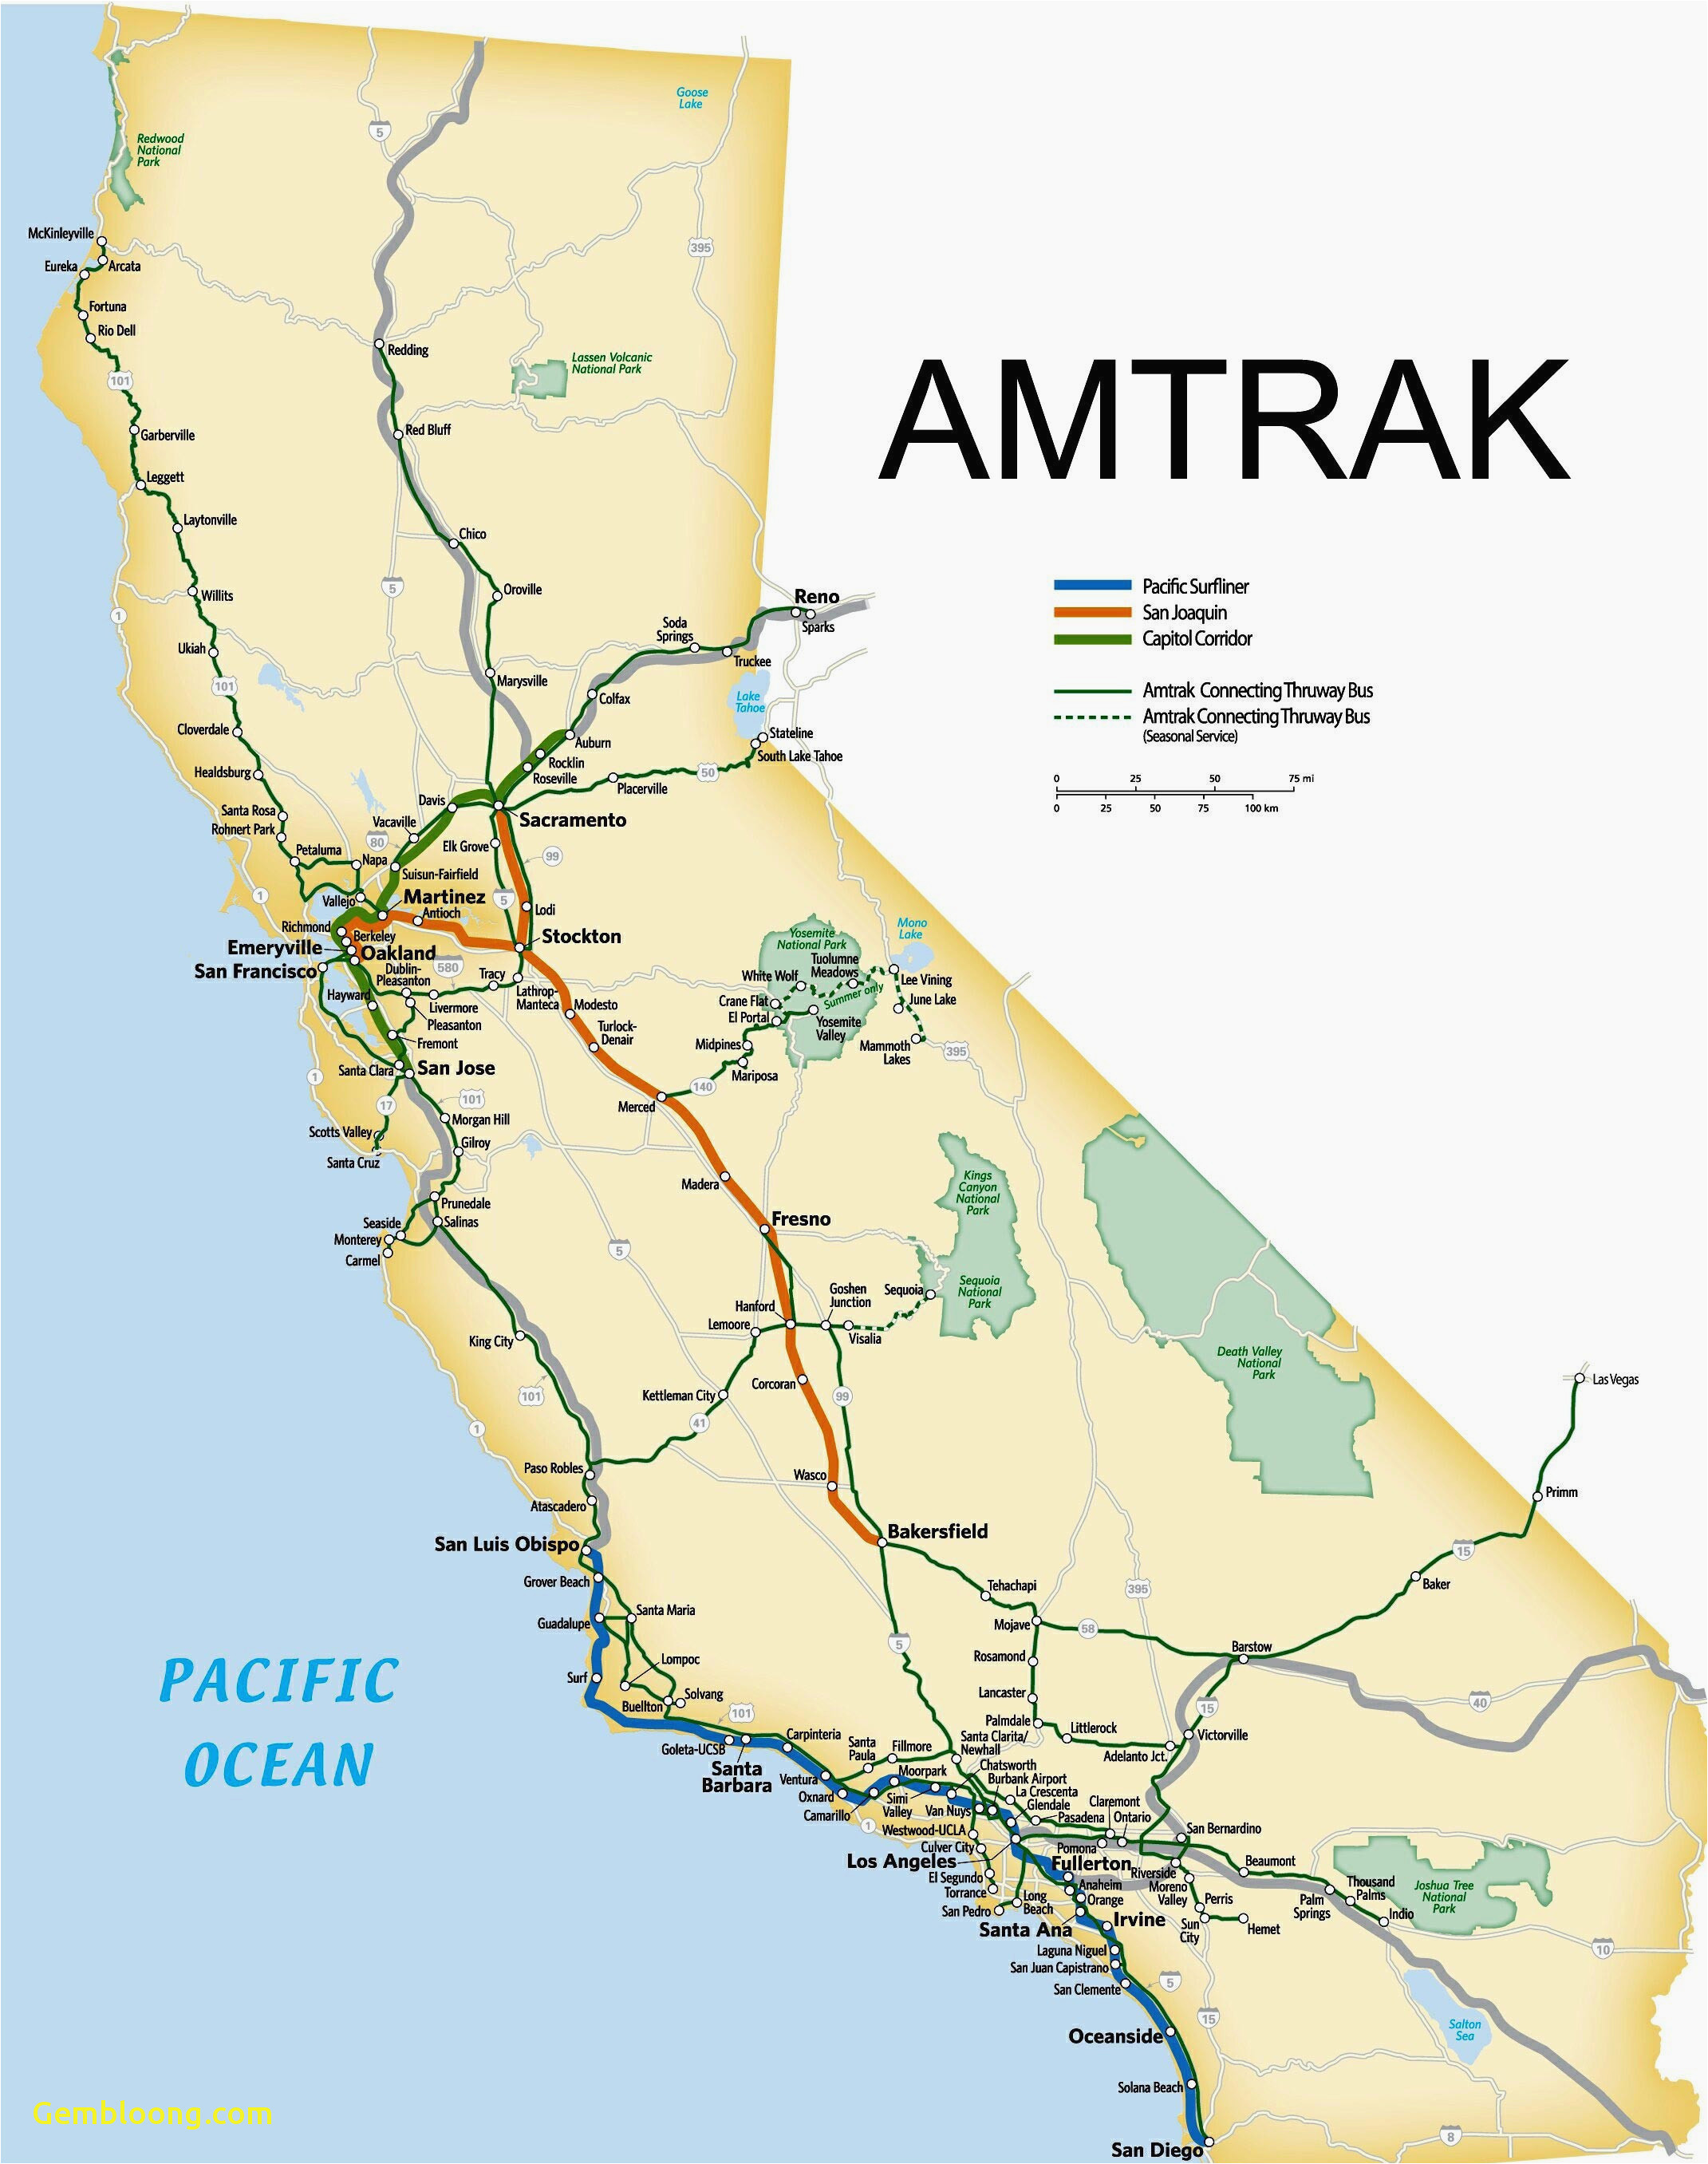 amtrak stations in california map secretmuseum